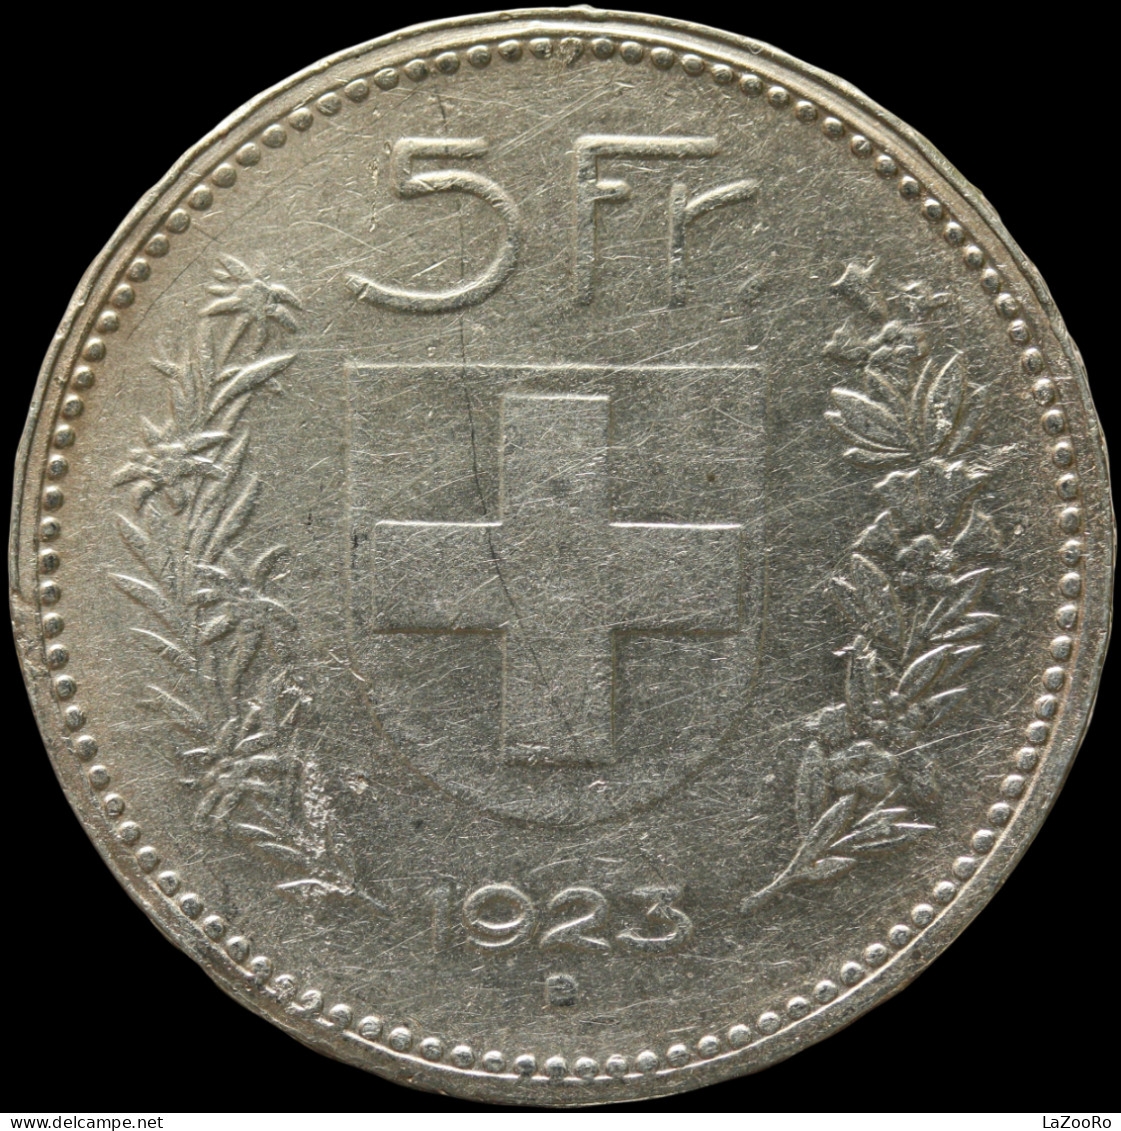 LaZooRo: Switzerland 5 Francs 1923 VF / XF - Silver - 5 Franken